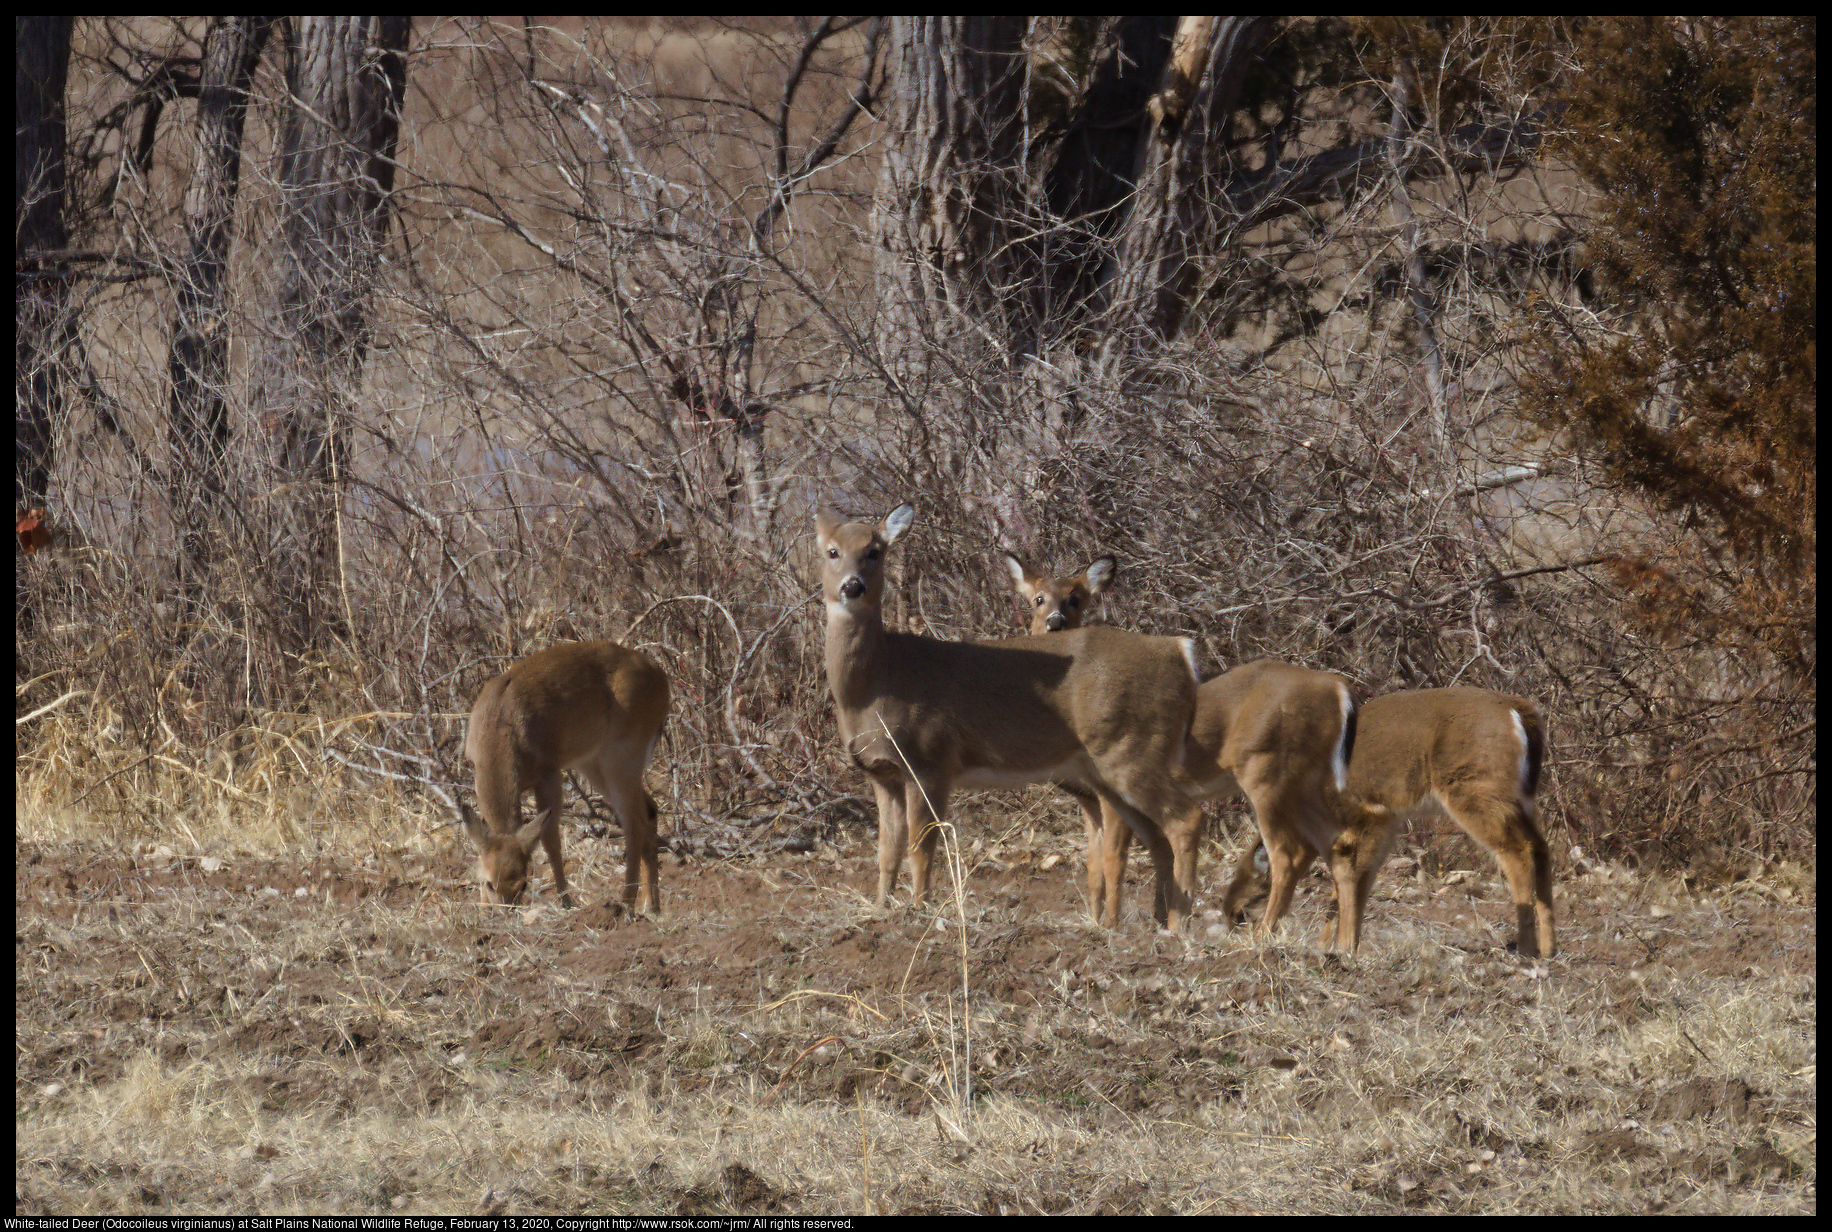 White-tailed Deer (Odocoileus virginianus) at Salt Plains National Wildlife Refuge, February 13, 2020